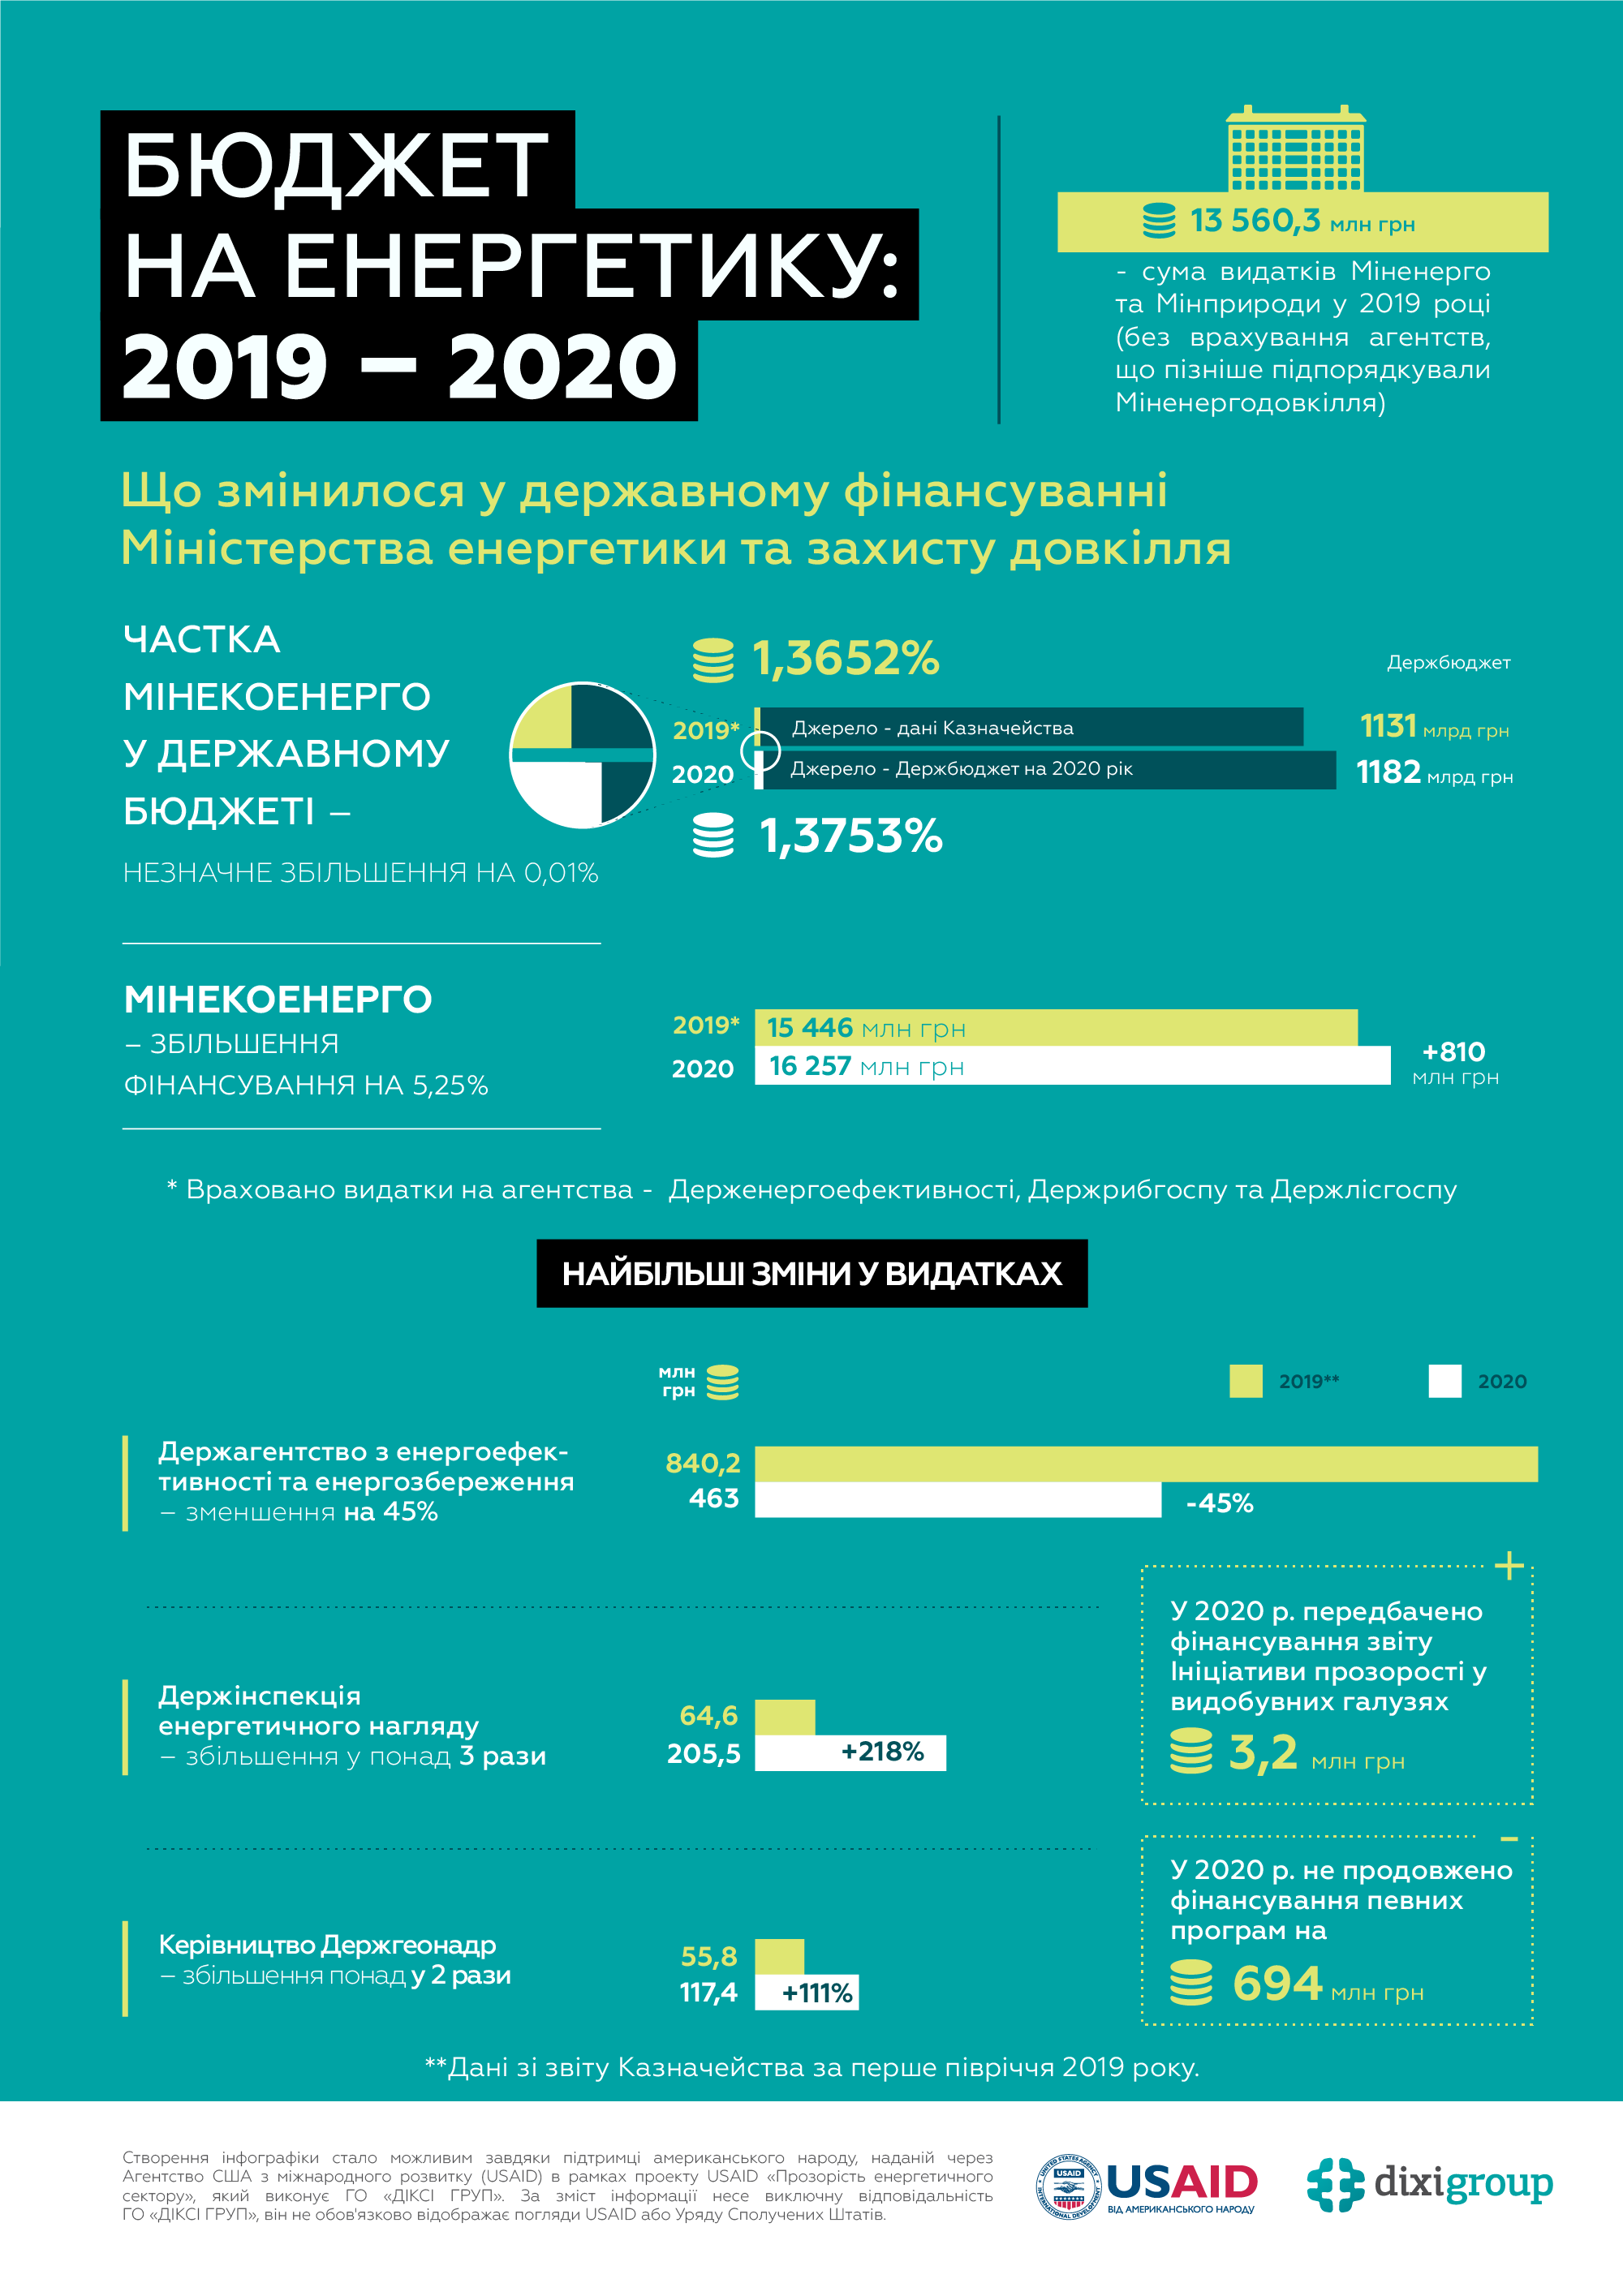 Бюджет на енергетику: 2020 — 2019